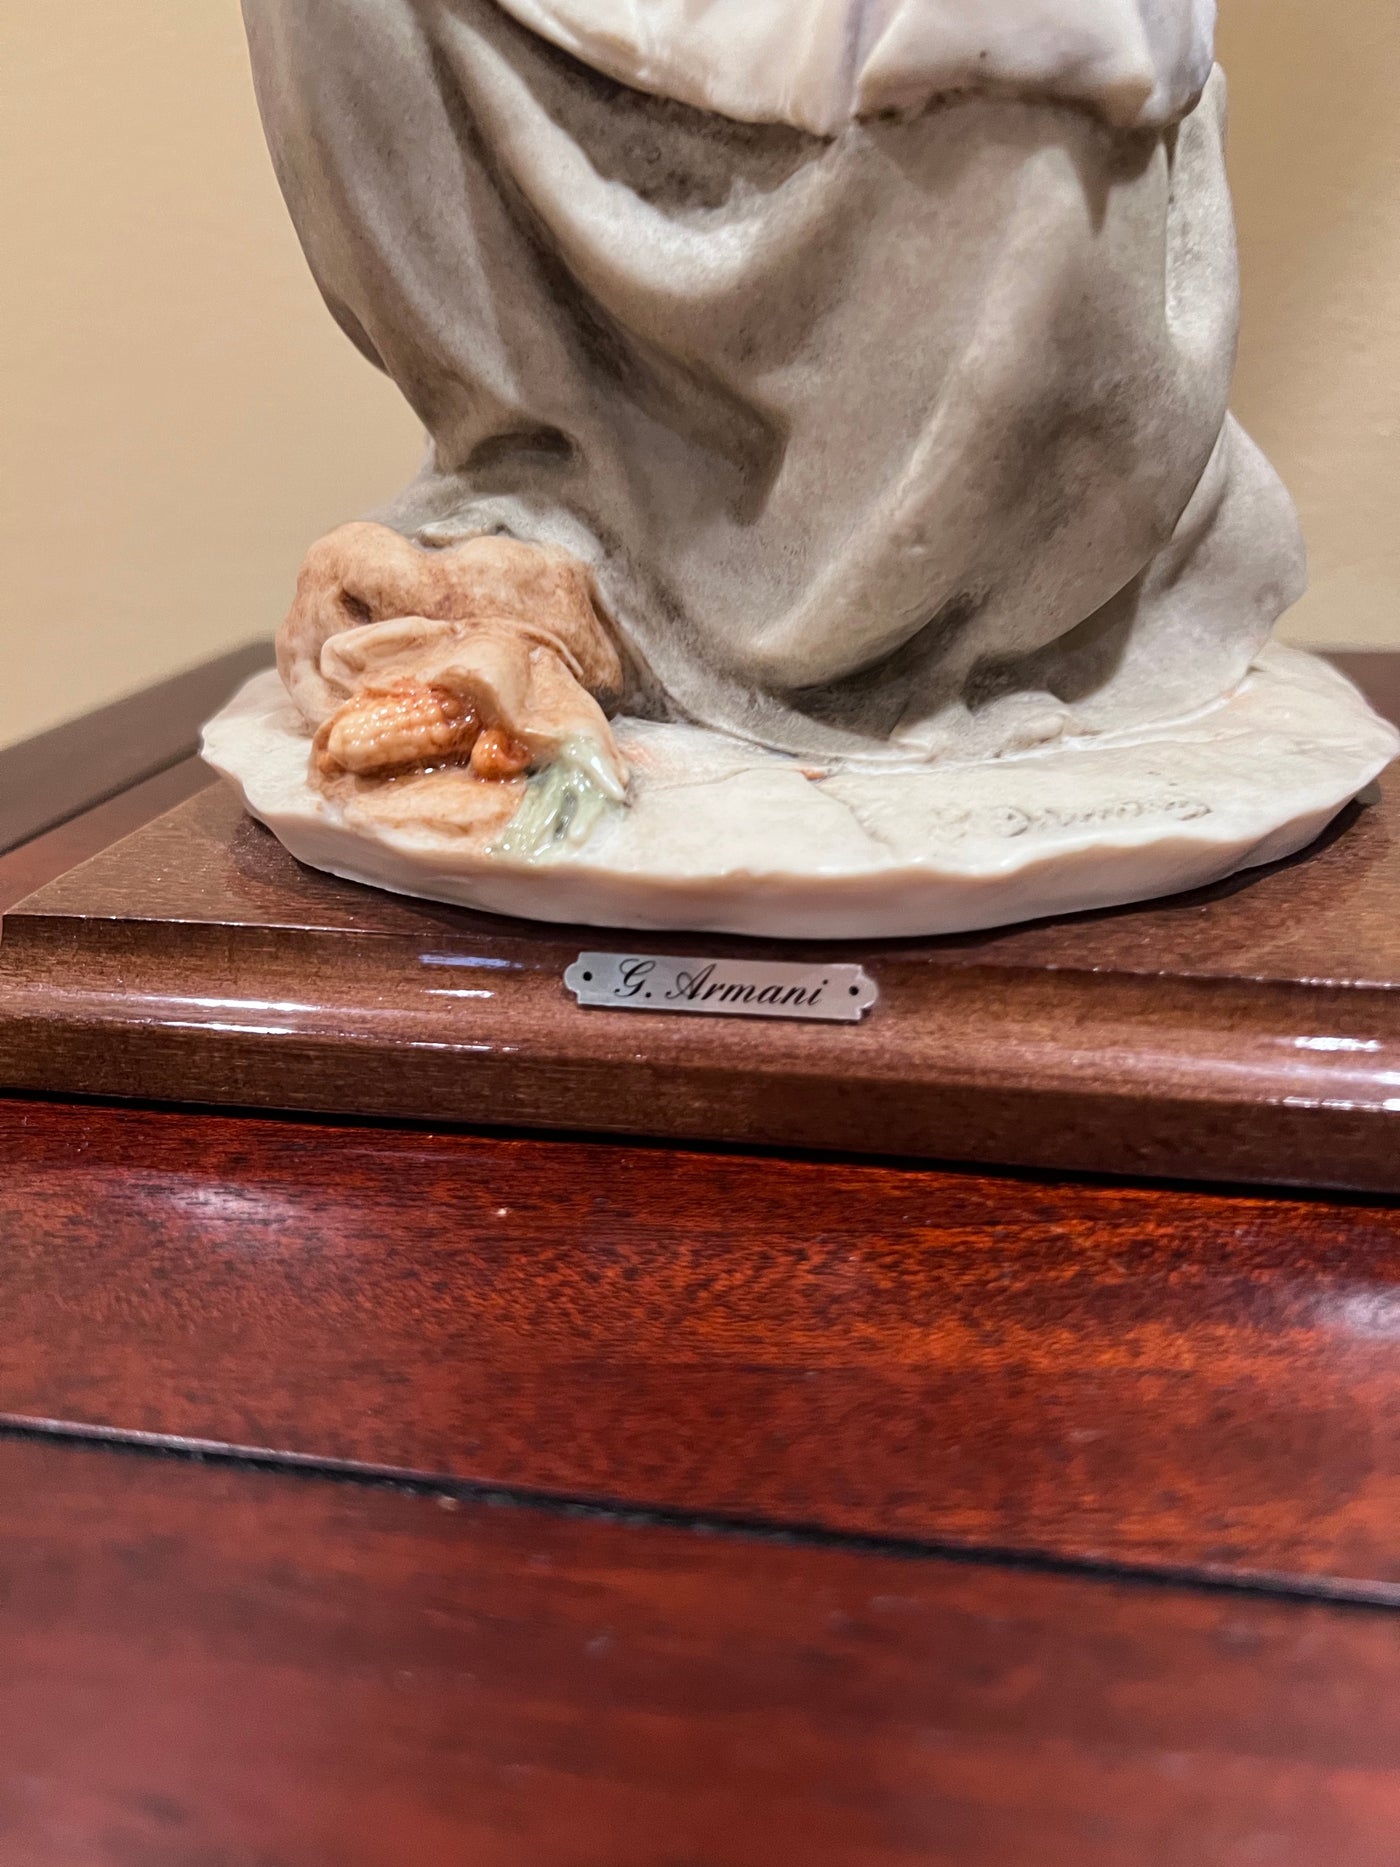 GIUSEPPE ARMANI- Capodimonte Figurine Maternity Mother & Child